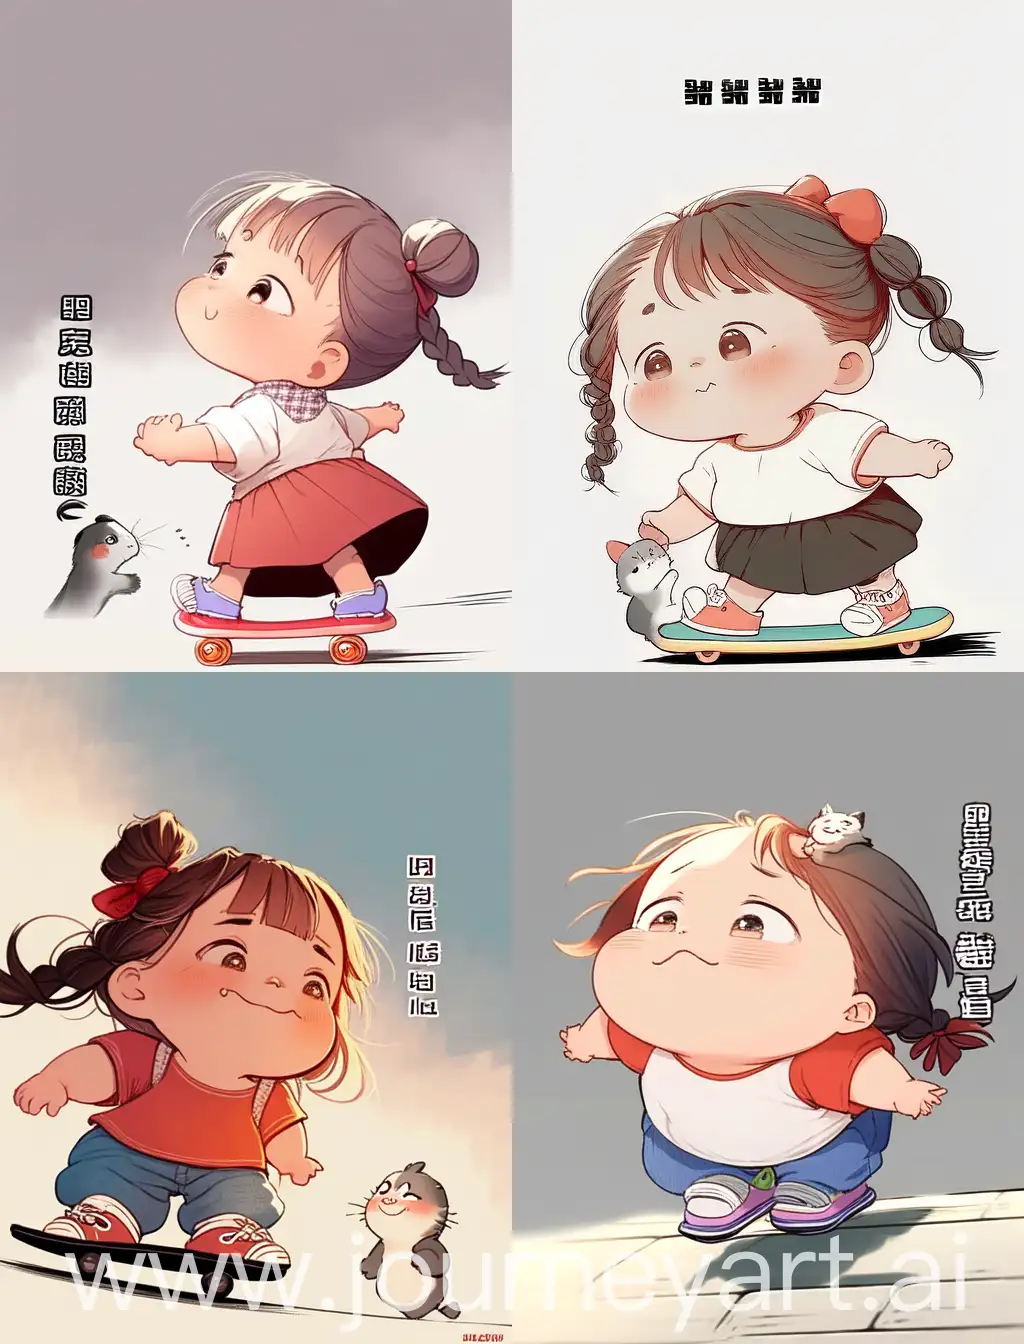 Adorable-Anime-Little-Girl-Skateboarding-with-Joyful-Laughter